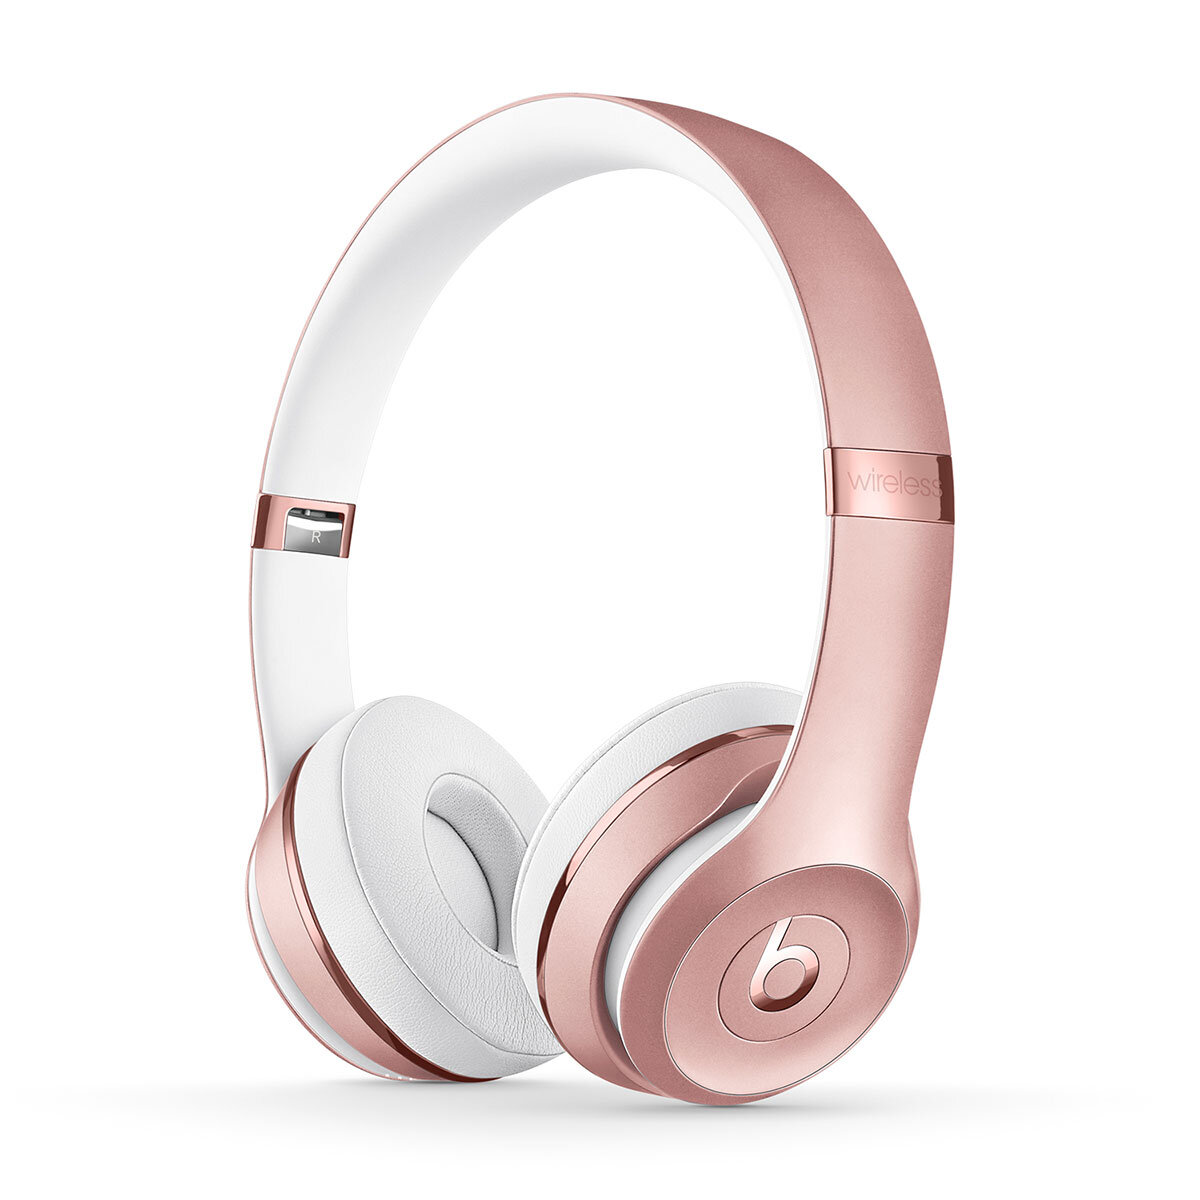 Buy BeatsSolo3, Beats Solo3 Wireless Headphones at costco.co.uk